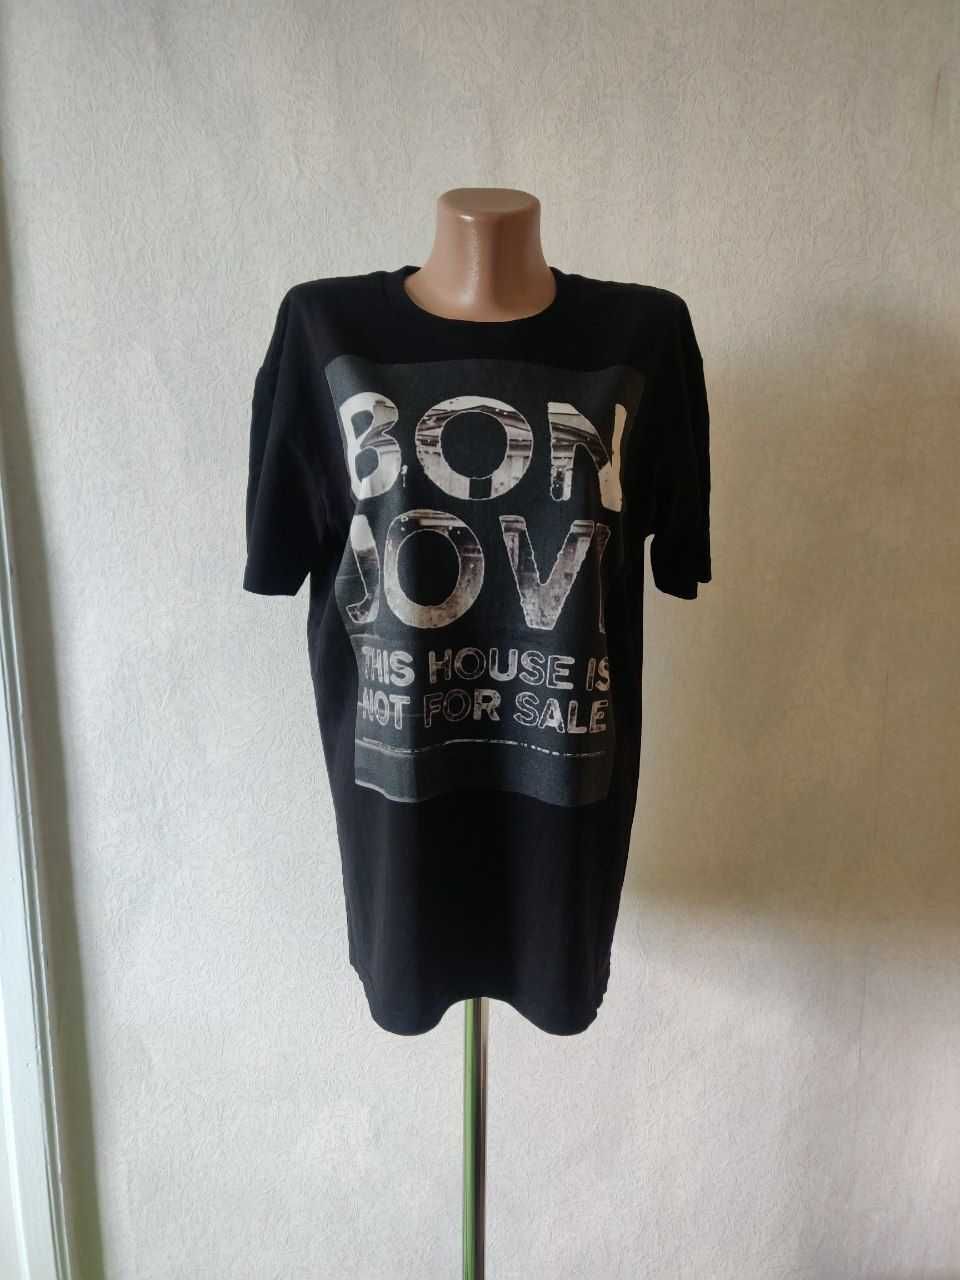 Bon Jovi мерч футболка атрибутика неформат